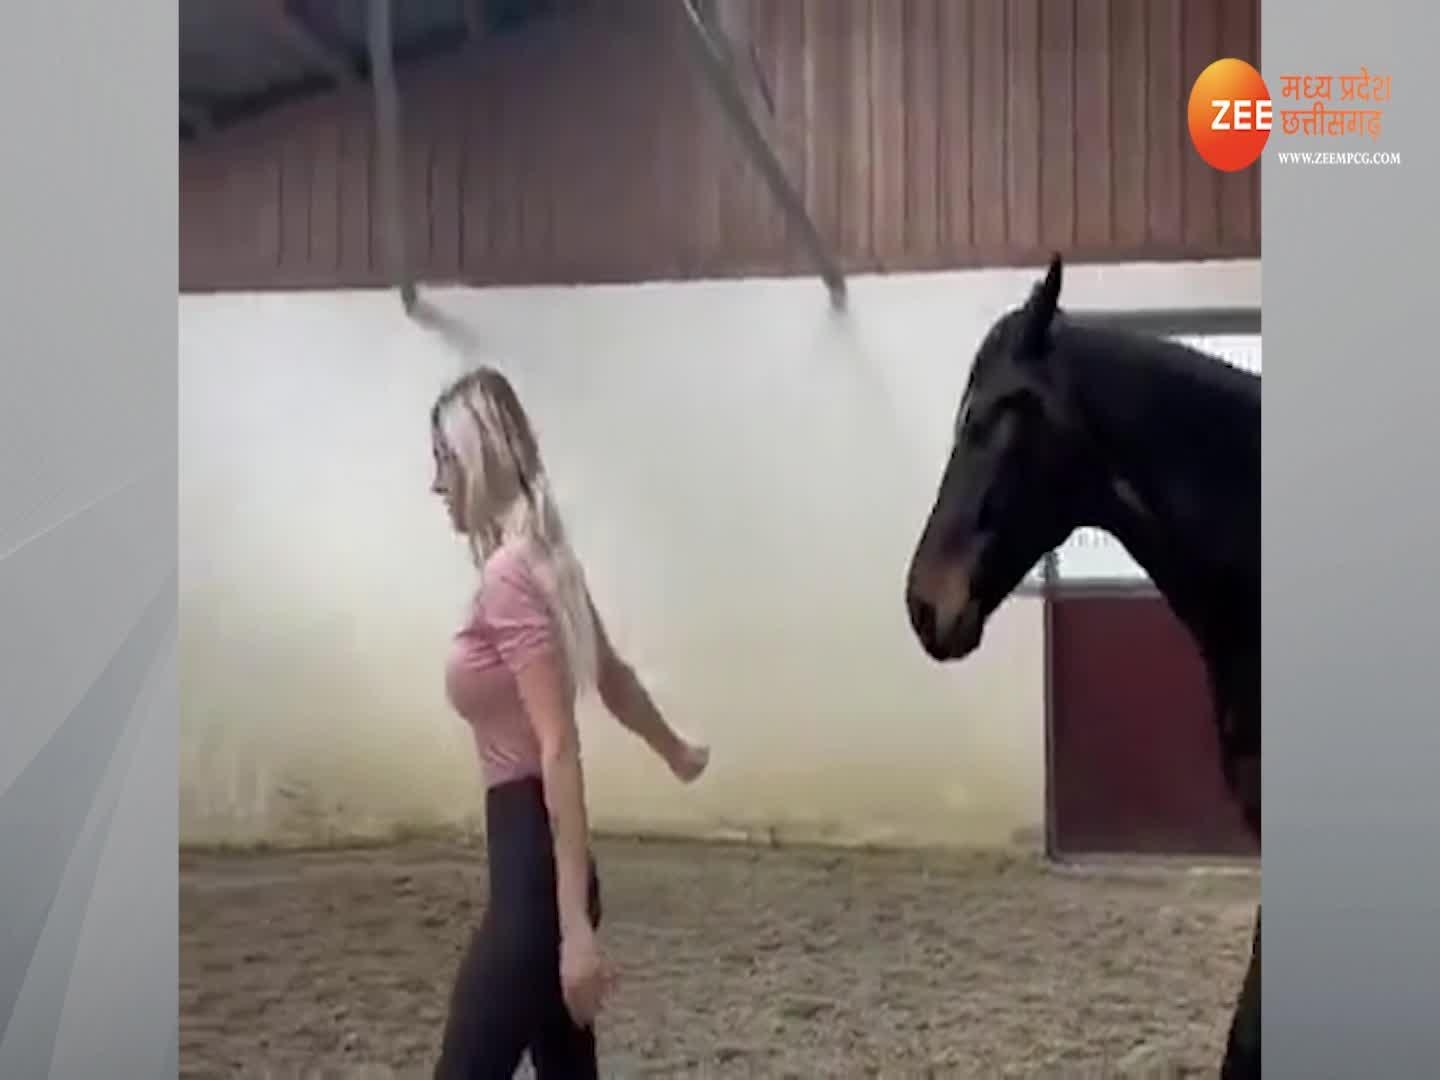 Ladki Aur Ghoda Ki Bf Sex Video - Girl and horse viral video Bridle fooled horse ladki or ghode ka video |  Girl-horse Video: à¤²à¤¡à¤¼à¤•à¥€ à¤•à¥‹ à¤¦à¥‡à¤–à¤•à¤° à¤˜à¥‹à¤¡à¤¼à¤¾ à¤•à¤°à¤¨à¥‡ à¤²à¤—à¤¾ à¤¯à¥‡ à¤šà¥€à¤œ, à¤¦à¥‡à¤–à¤¿à¤ VIDEO | Zee  News Hindi